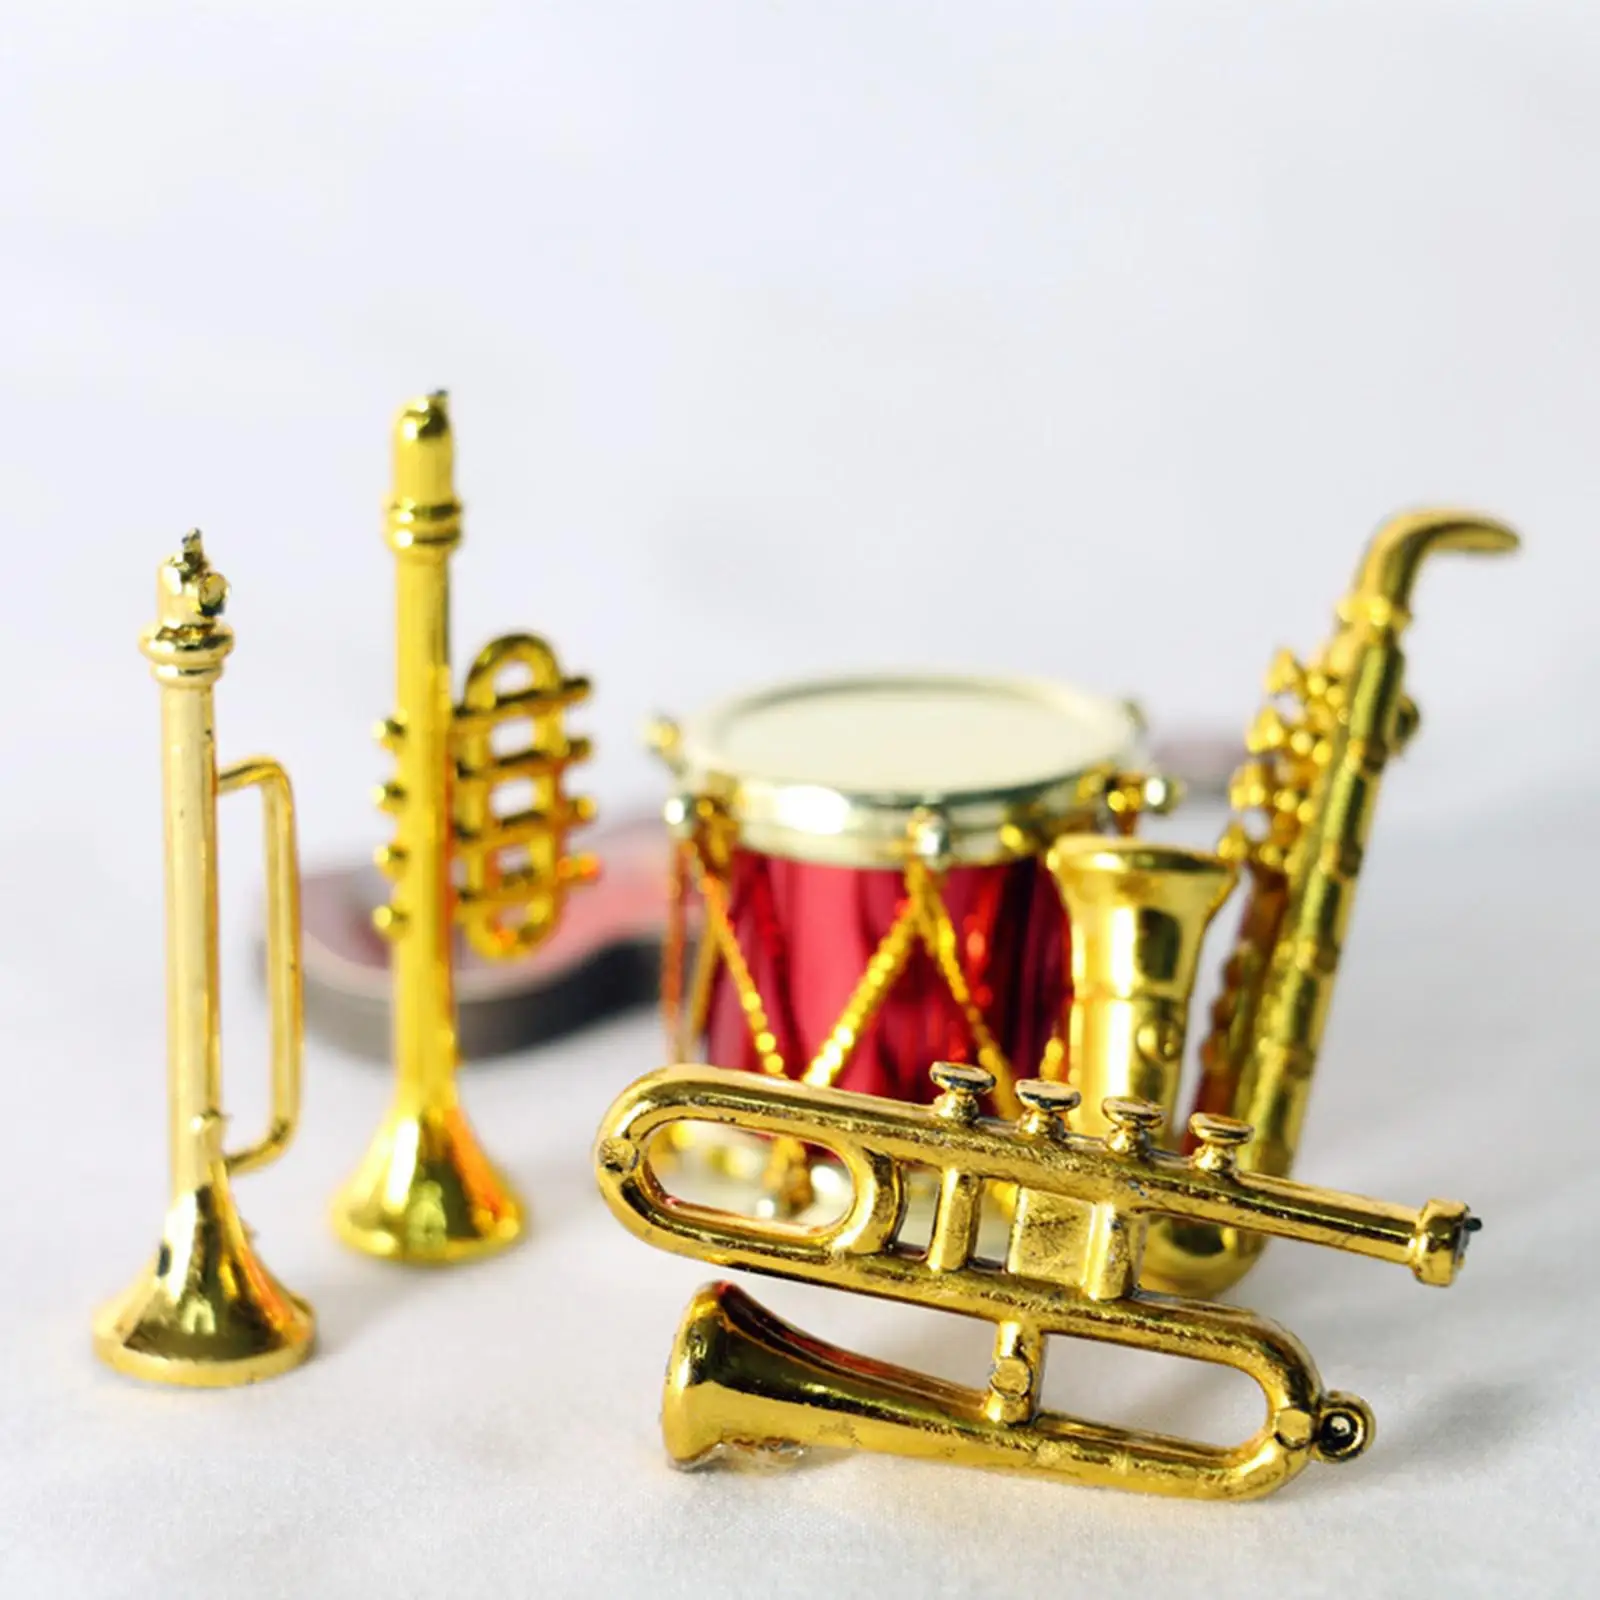 Dollhouse Miniature Musical Instrument Miniature Saxophone for Children